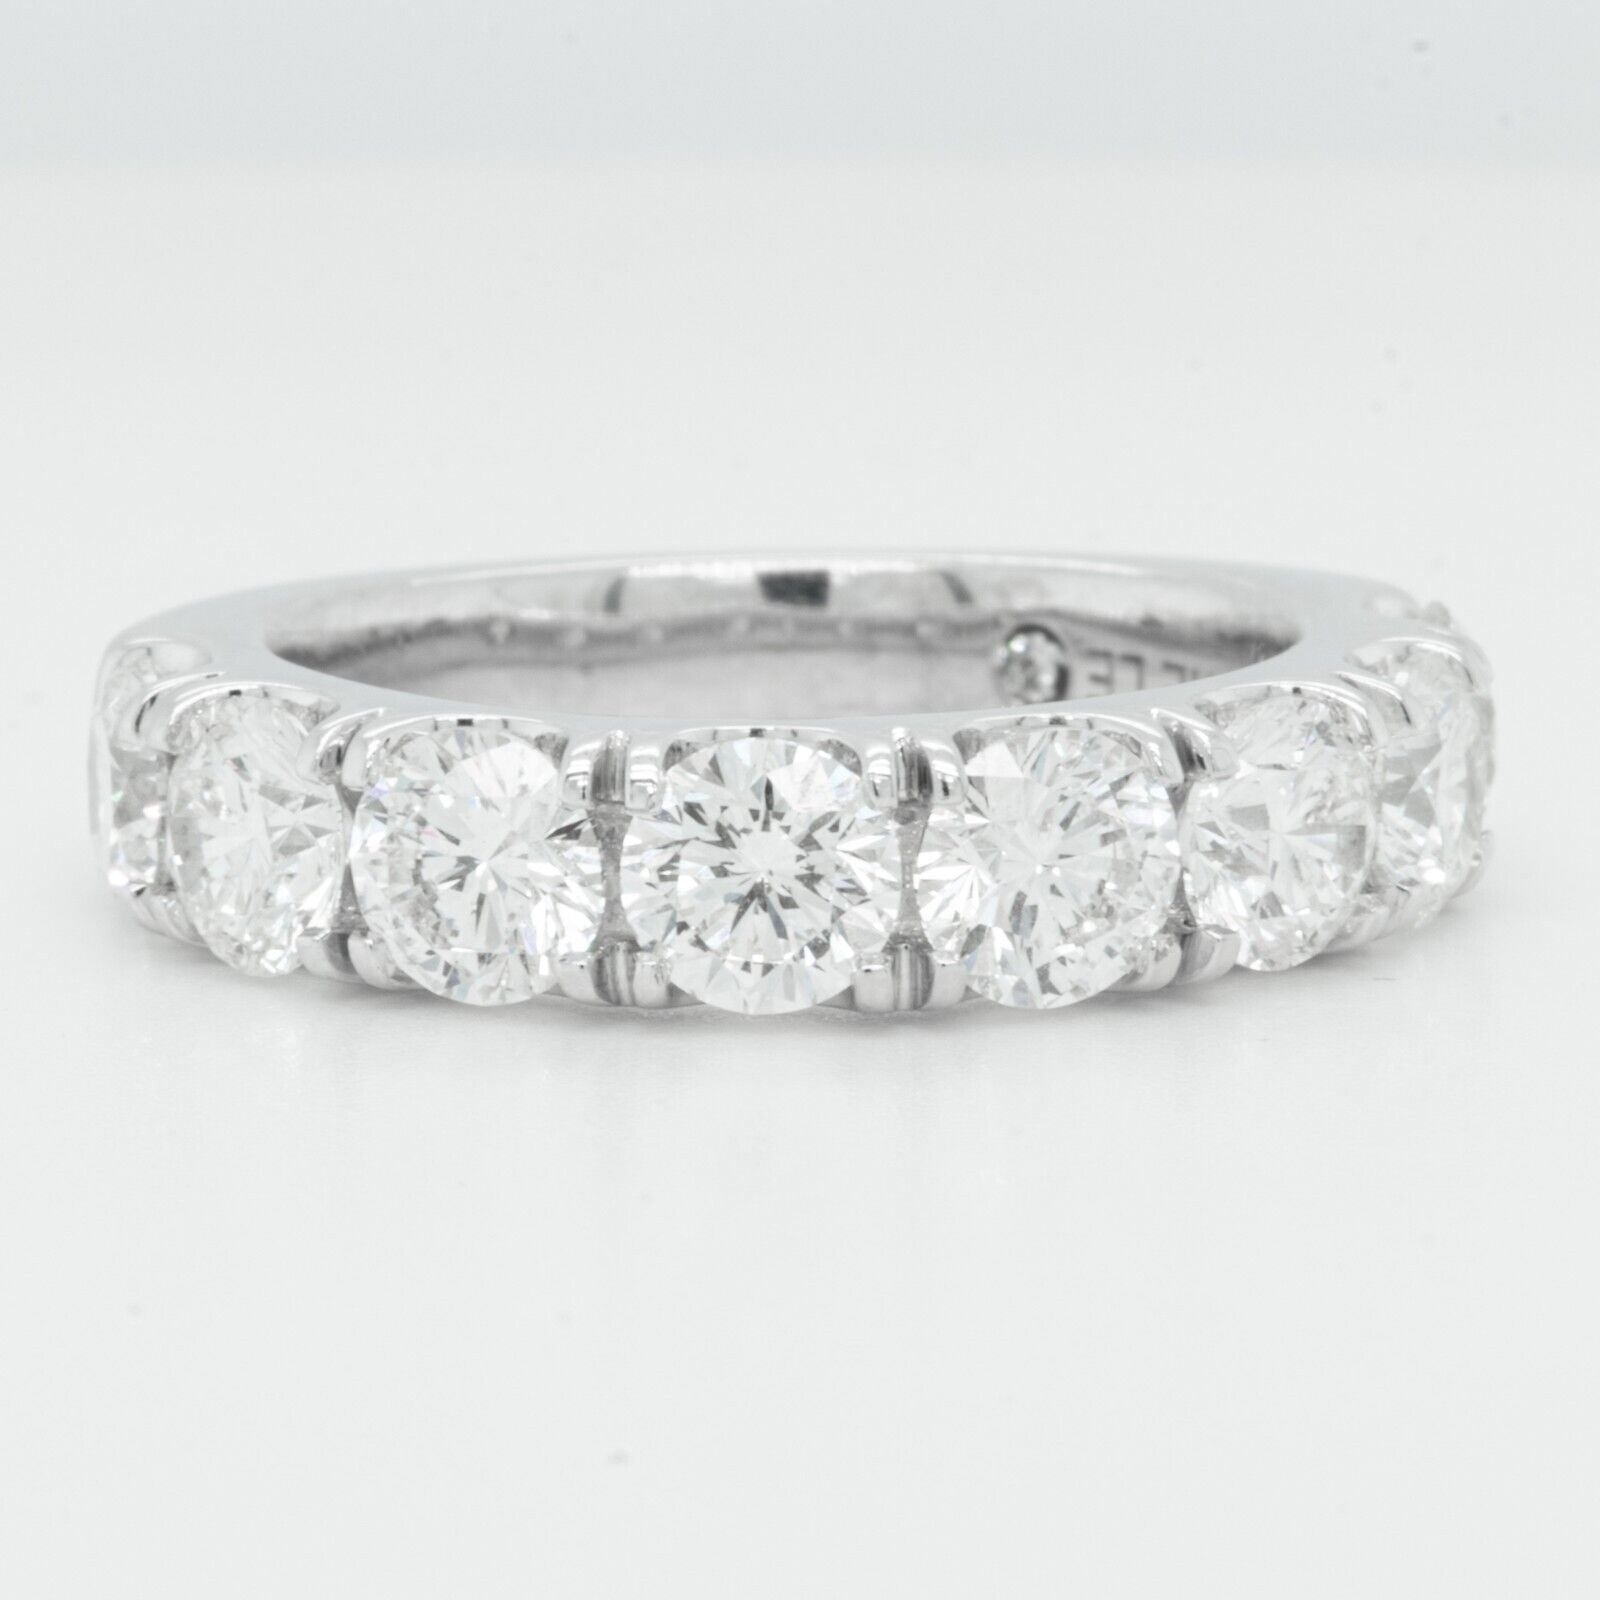 14k White Gold Diamond 8 Stone Wedding Band 3.12ctw H SI1 Ring Size 6.75 THE LEO